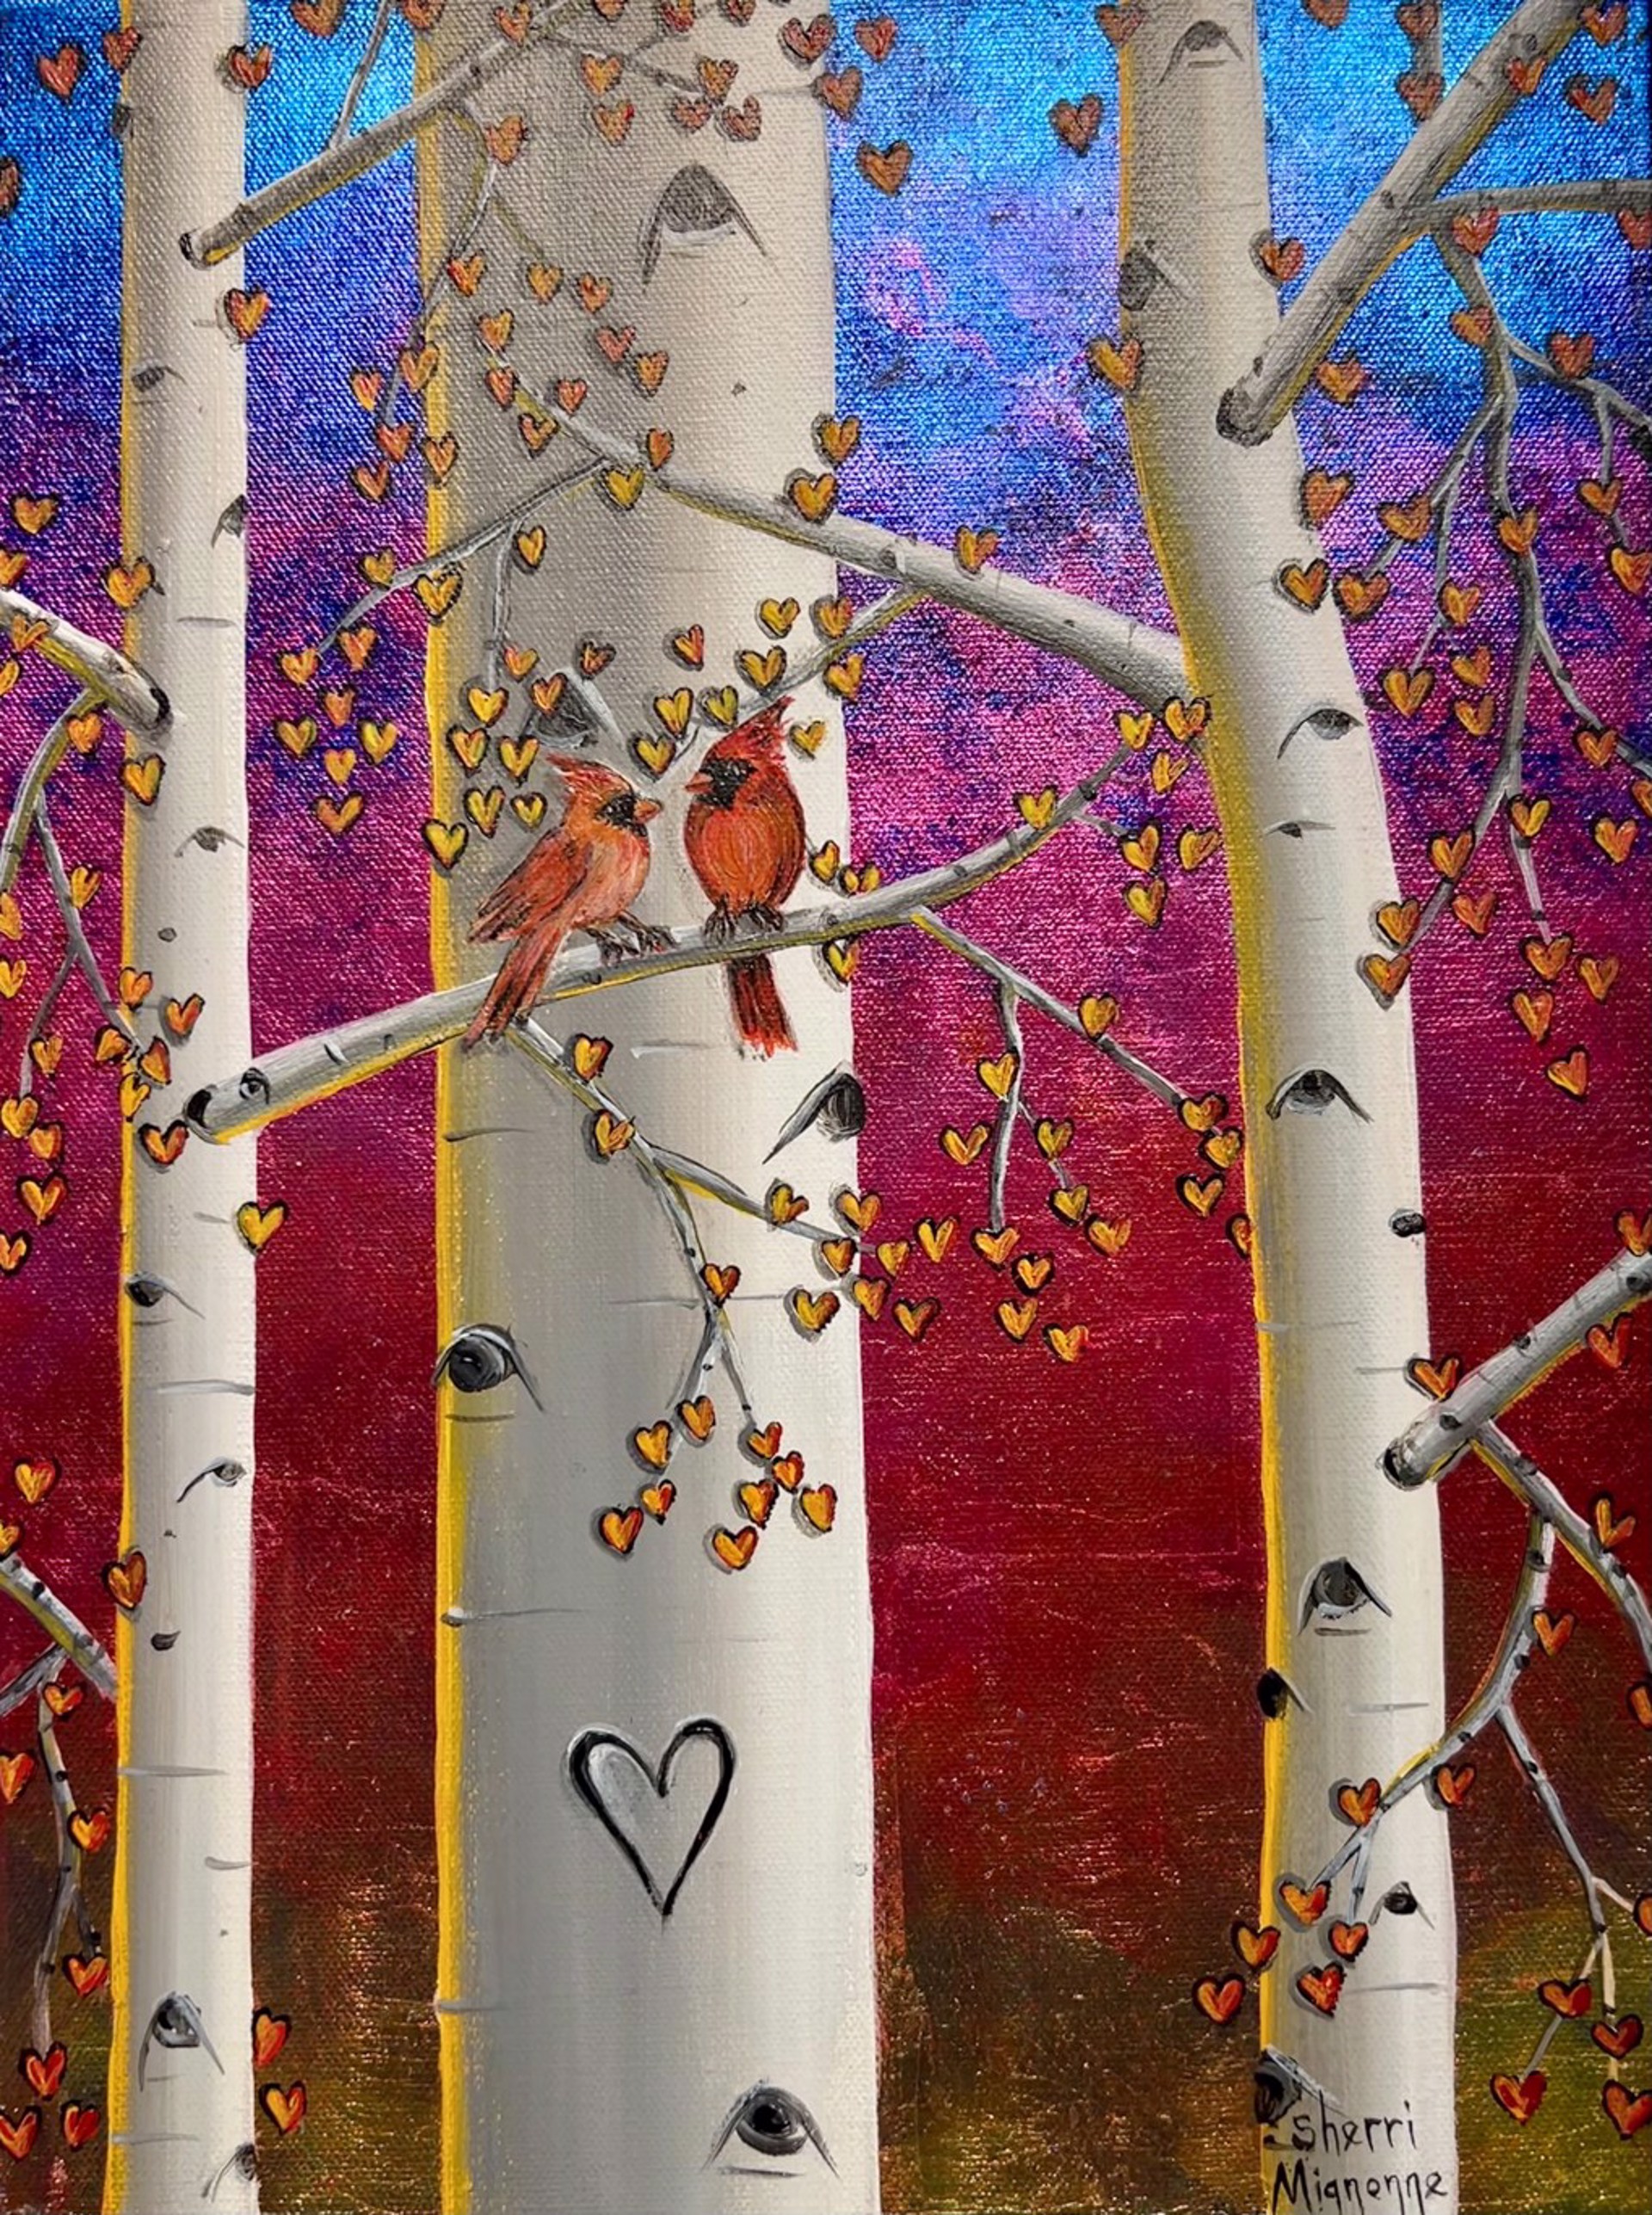 Cardinal Love by Sherri Mignonne